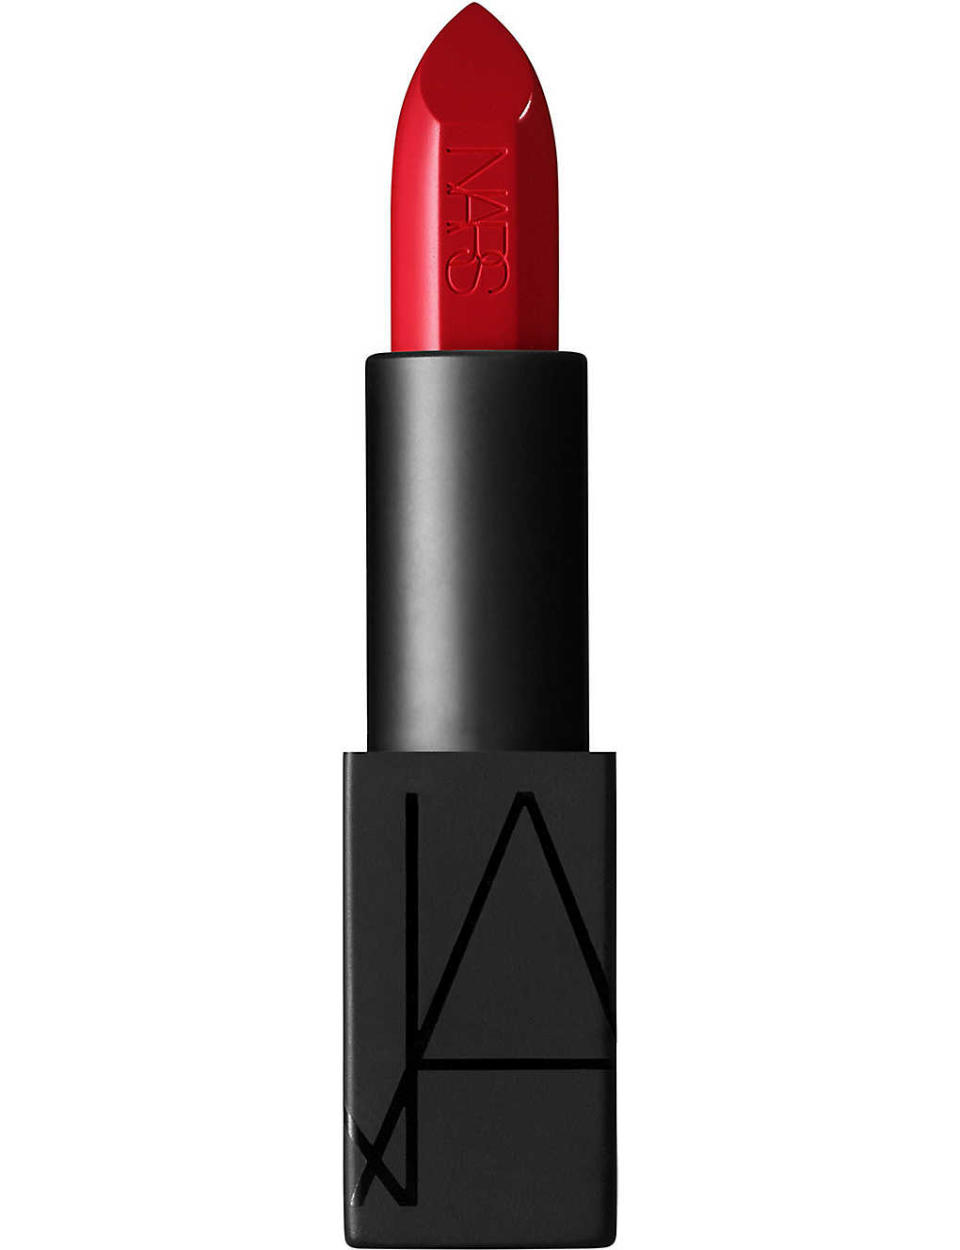 Audacious lipstick